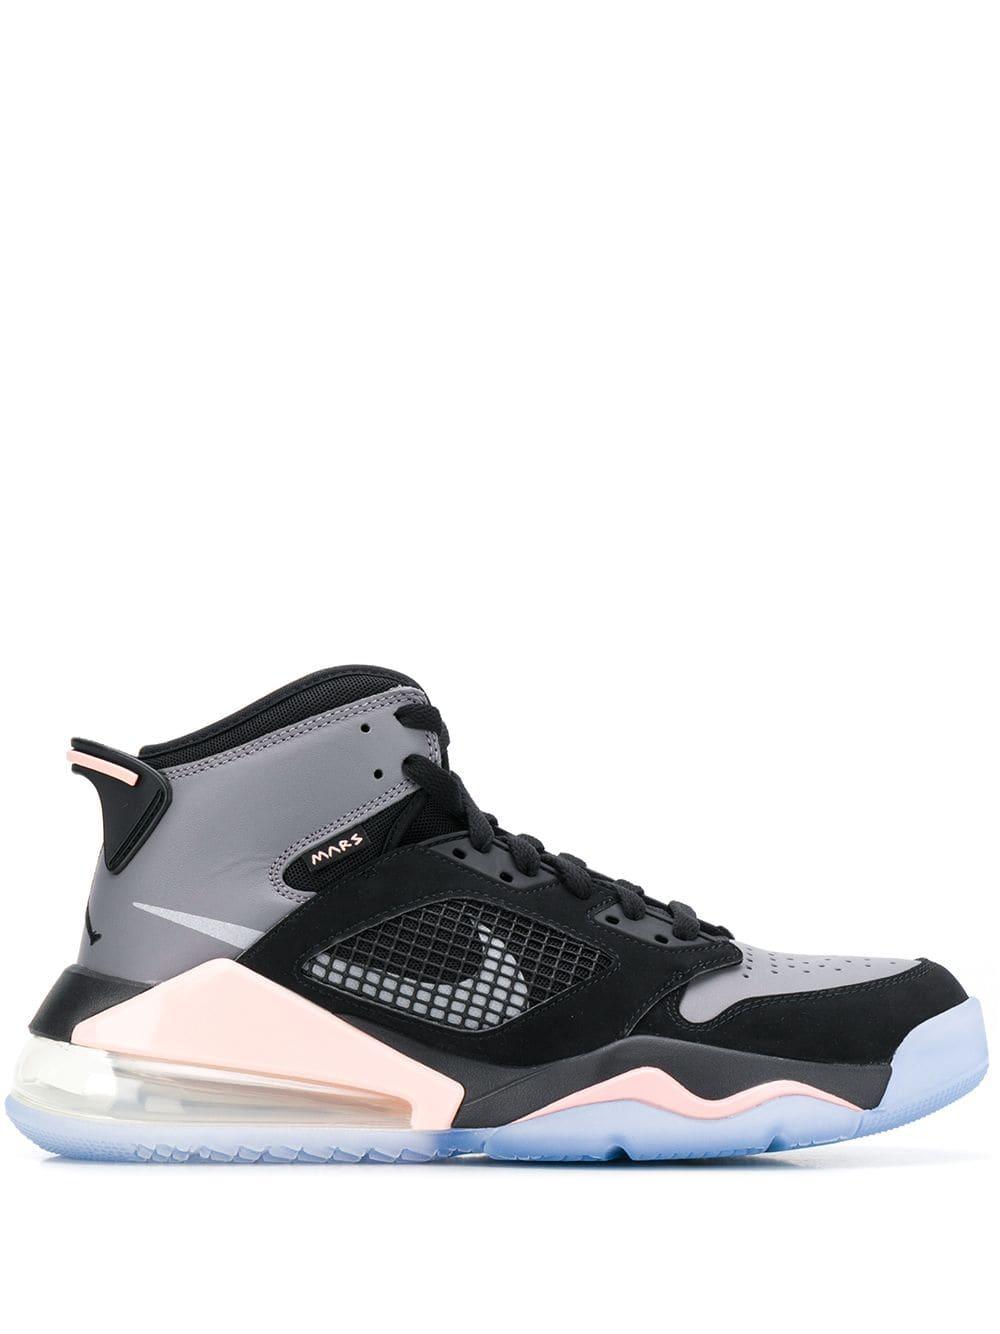 Nike Synthetic Jordan Mars 270 Sneakers in Black for Men - Lyst